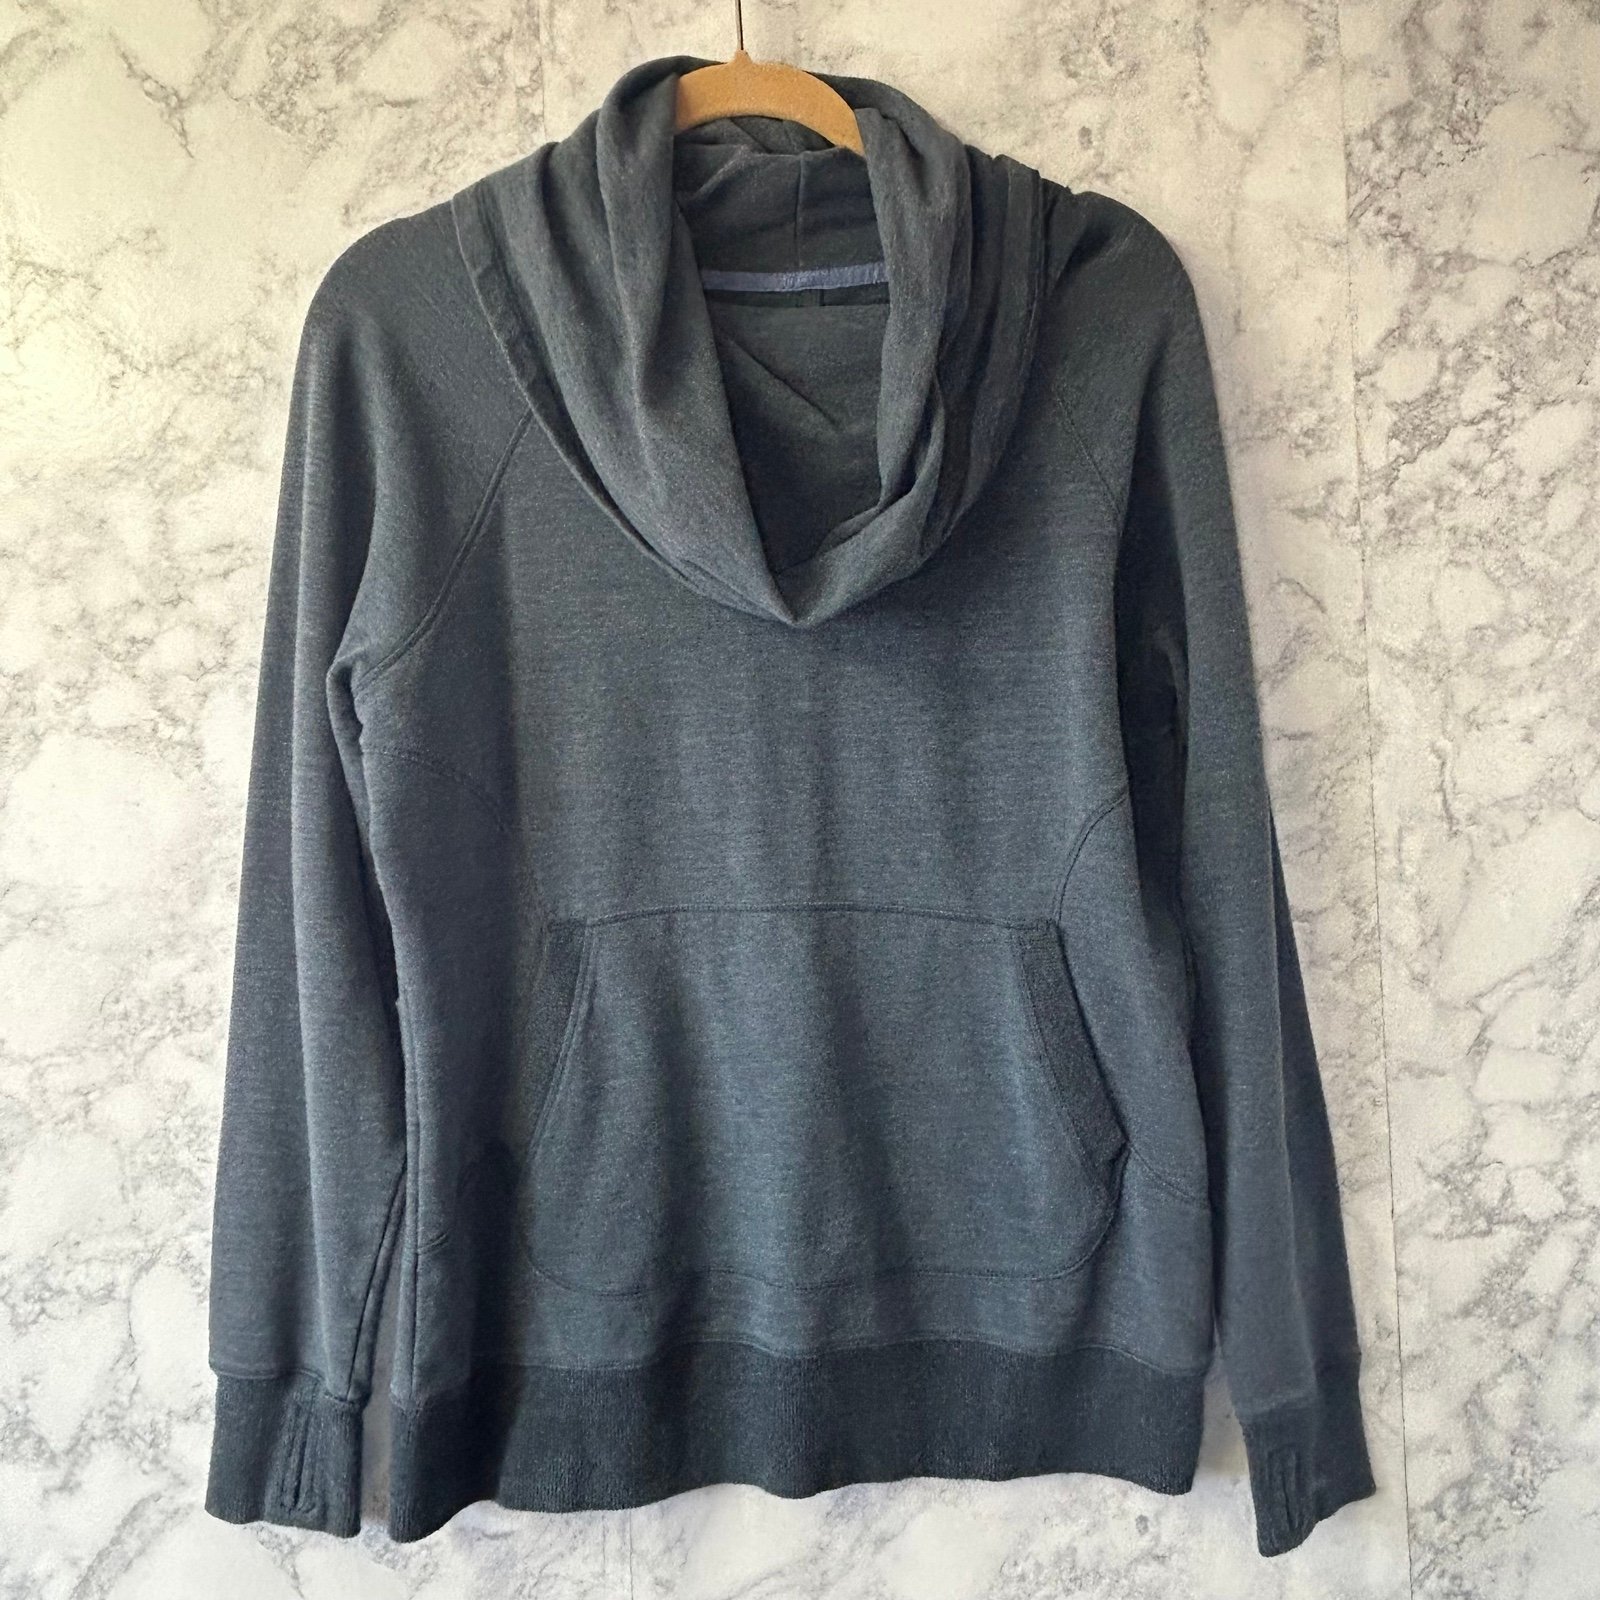 L.L bean cozy pullover sweatshirt- woman’s size large ad41y9dik